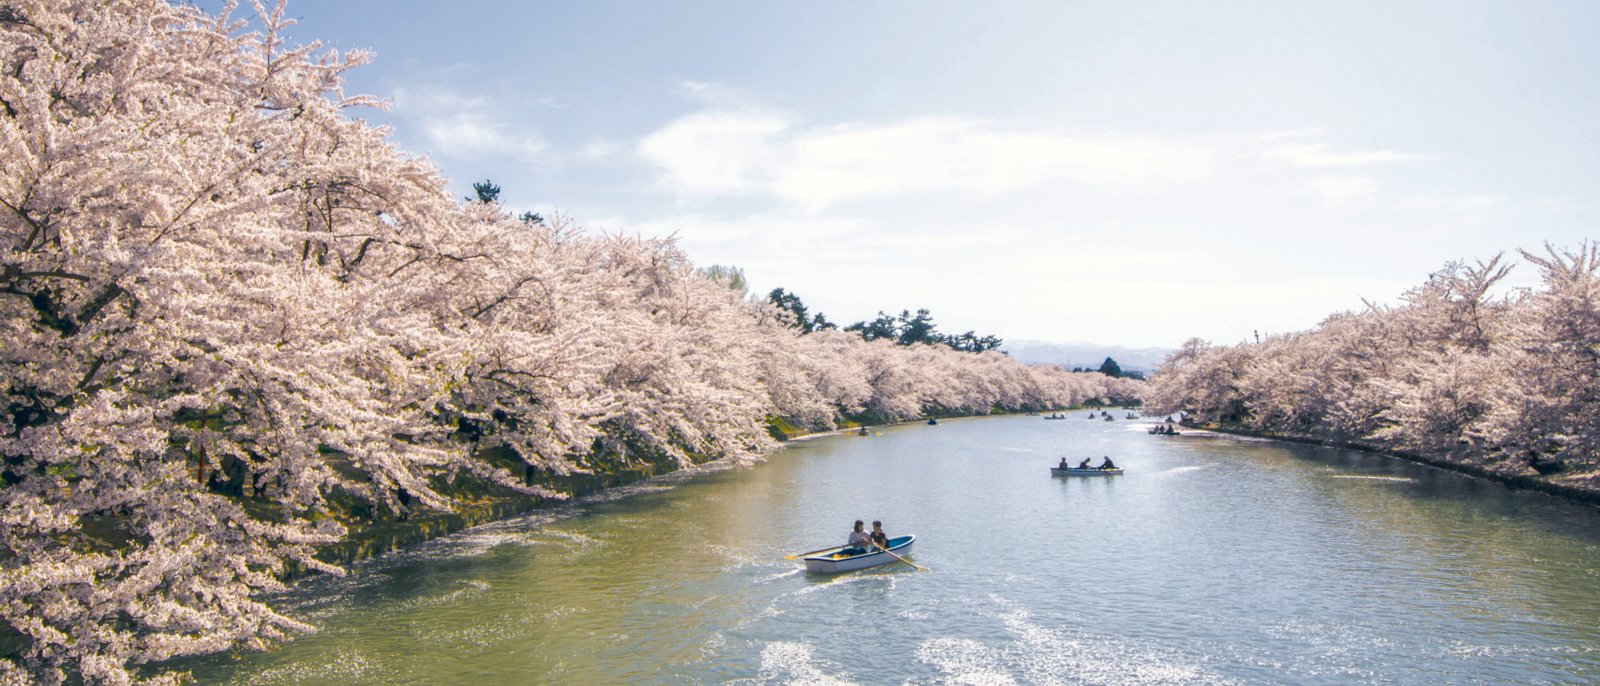 Cherry blossoms at the Hirosaki Castle Park in Hirosaki, Aomori, Japan